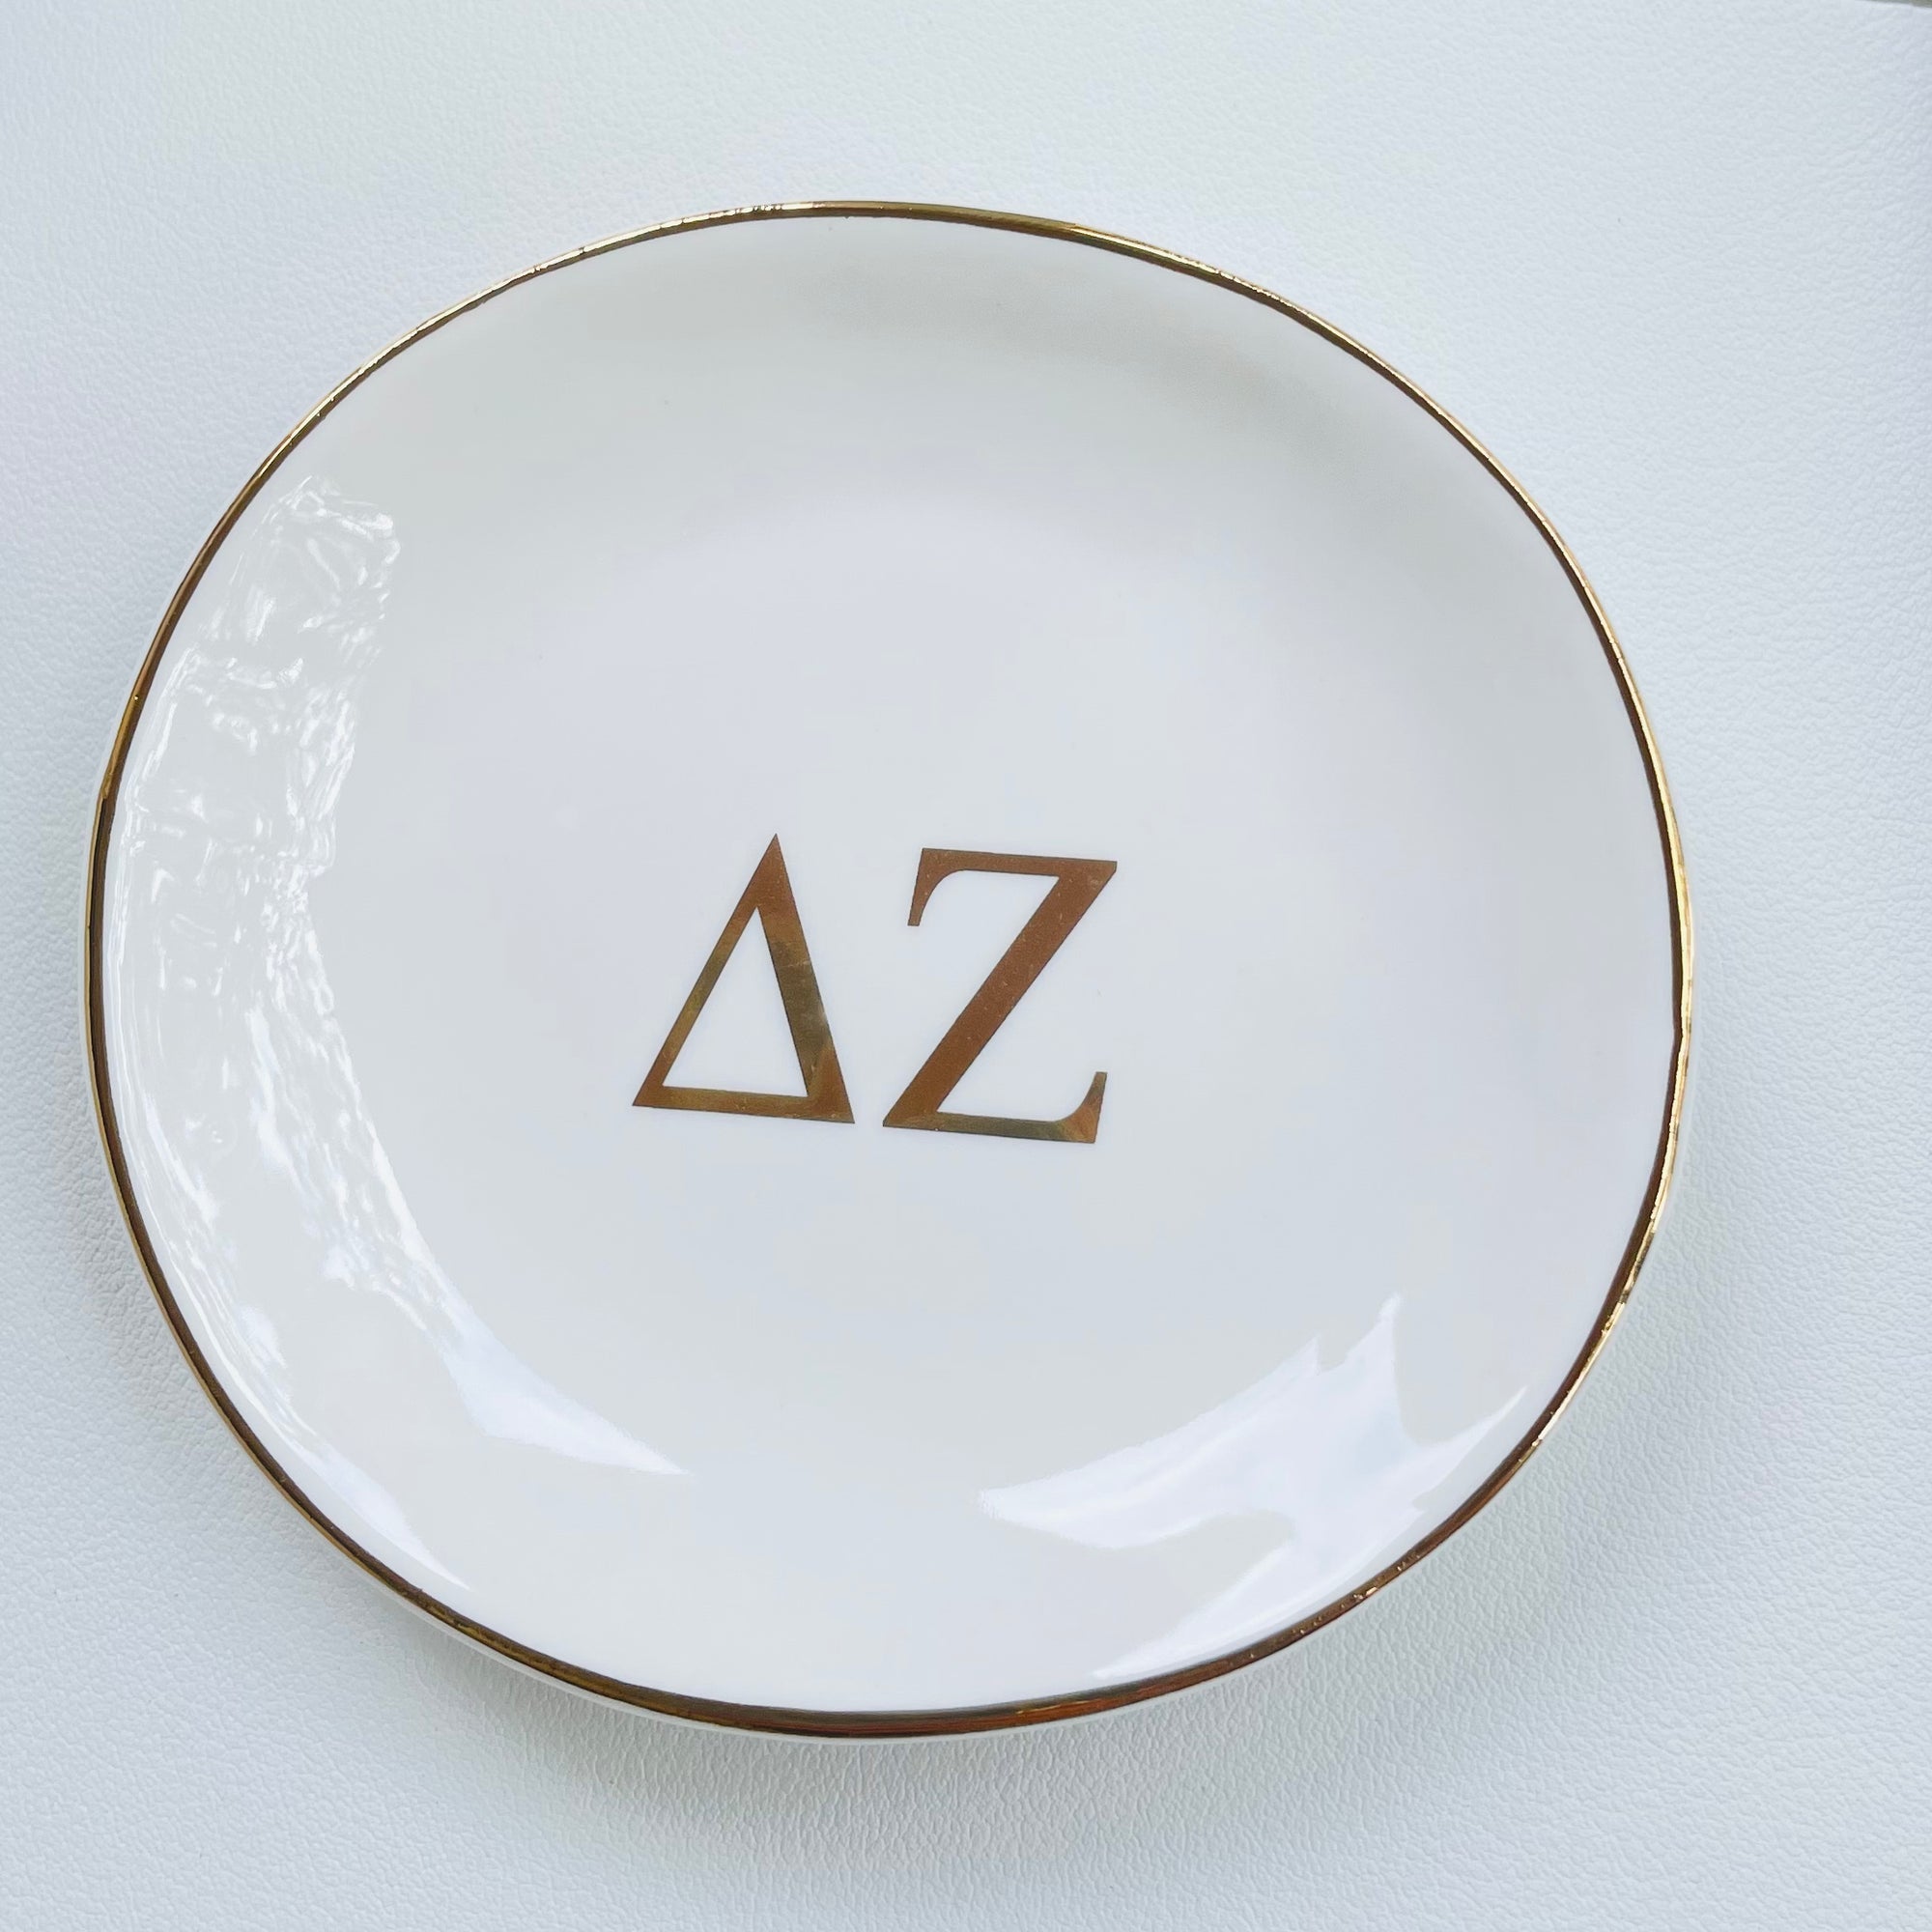 Delta Zeta Sorority Ring Dish with gold trim